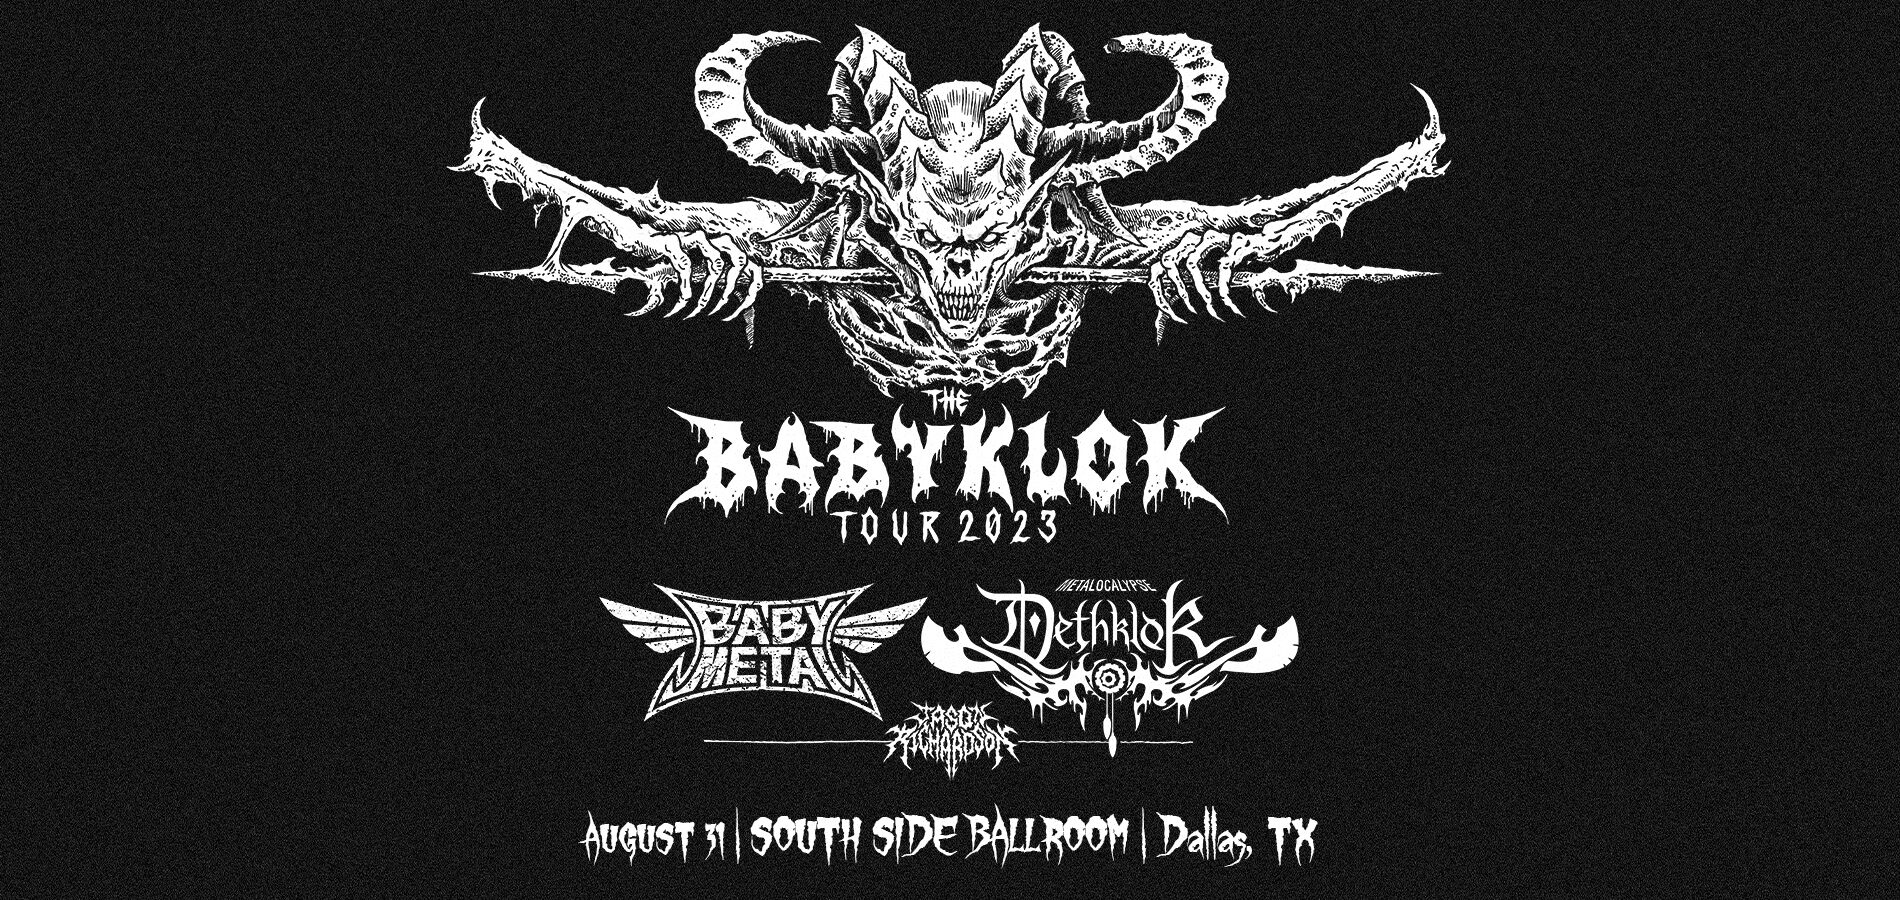 BABYMETAL + Dethklok: The Babyklock Tour